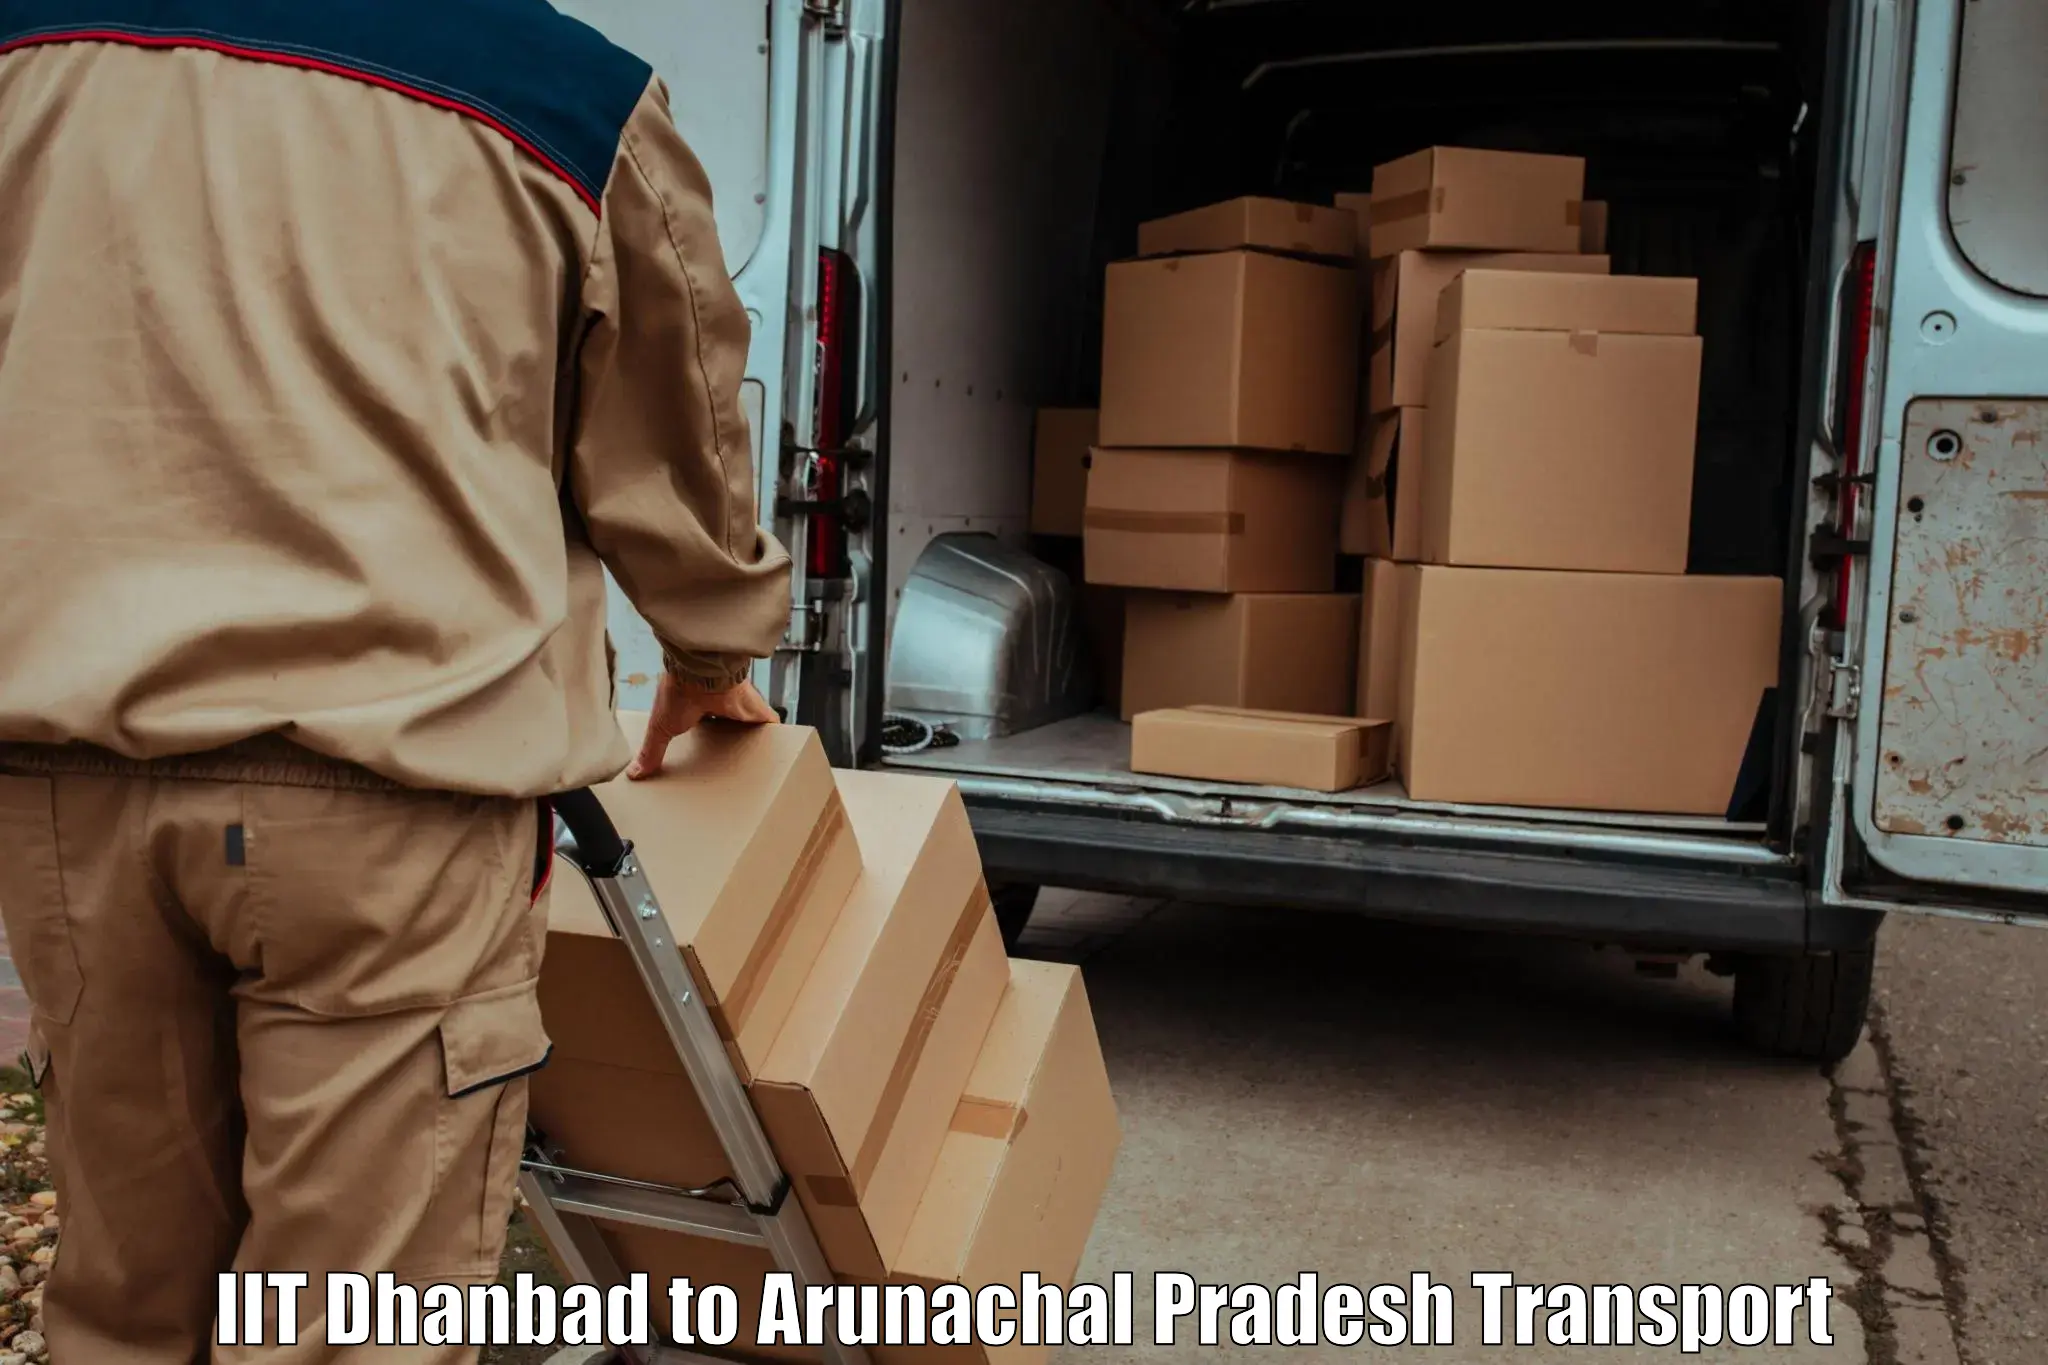 Vehicle transport services in IIT Dhanbad to Upper Subansiri